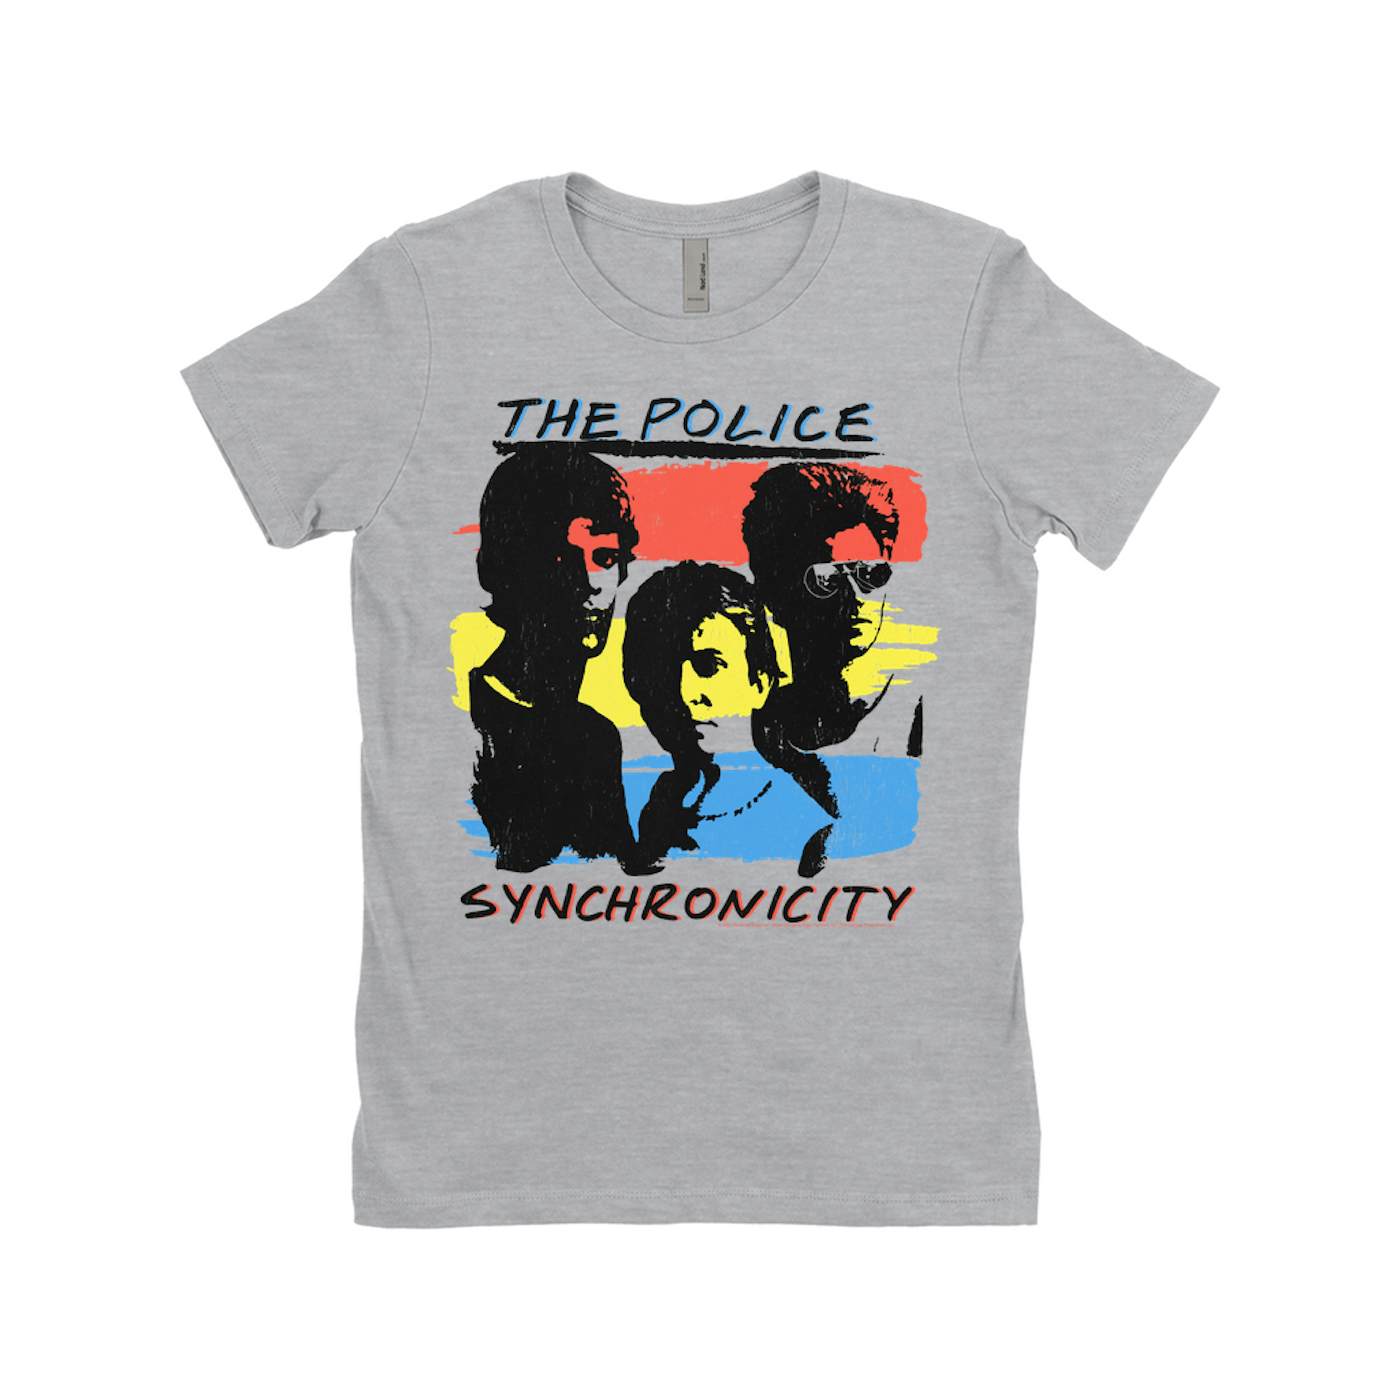 The Police Ladies' Boyfriend T-Shirt | Synchronicity Colorful Album Design (Merchbar Exclusive) The Police Shirt